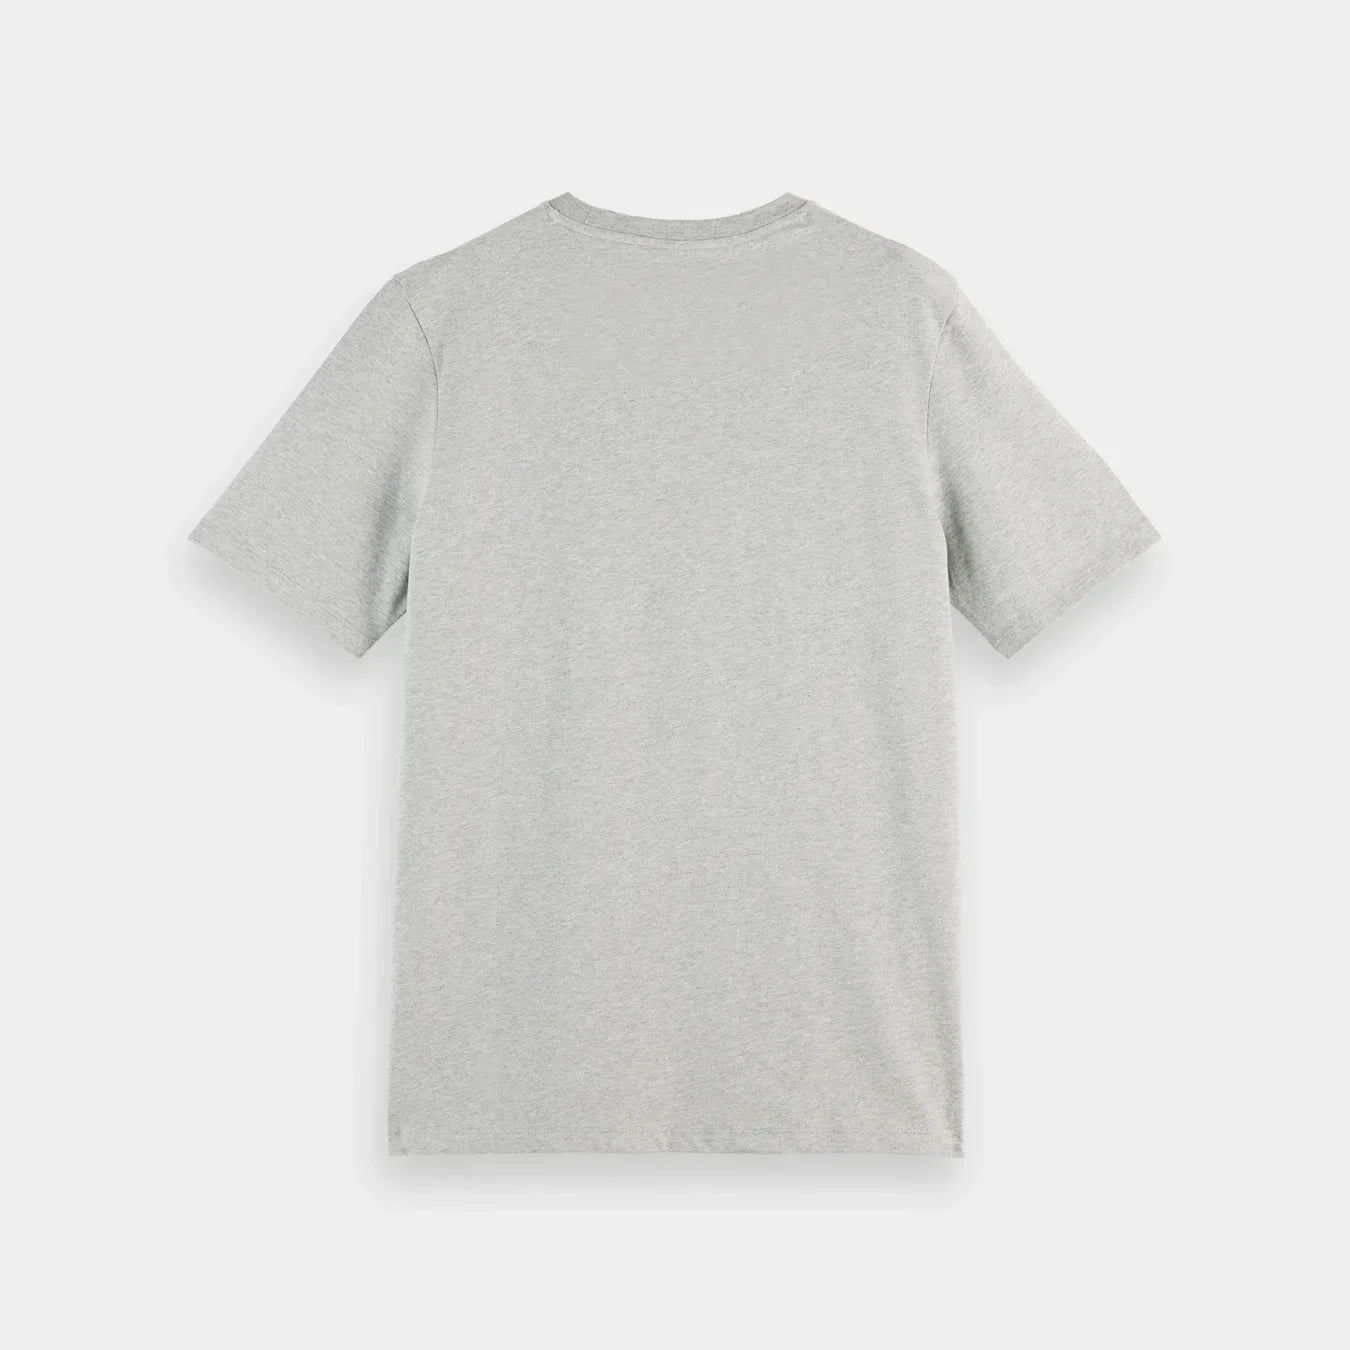 'Scotch & Soda Crewneck Jersey T-Shirt In Organic Cotton' in 'Grey Melange' colour